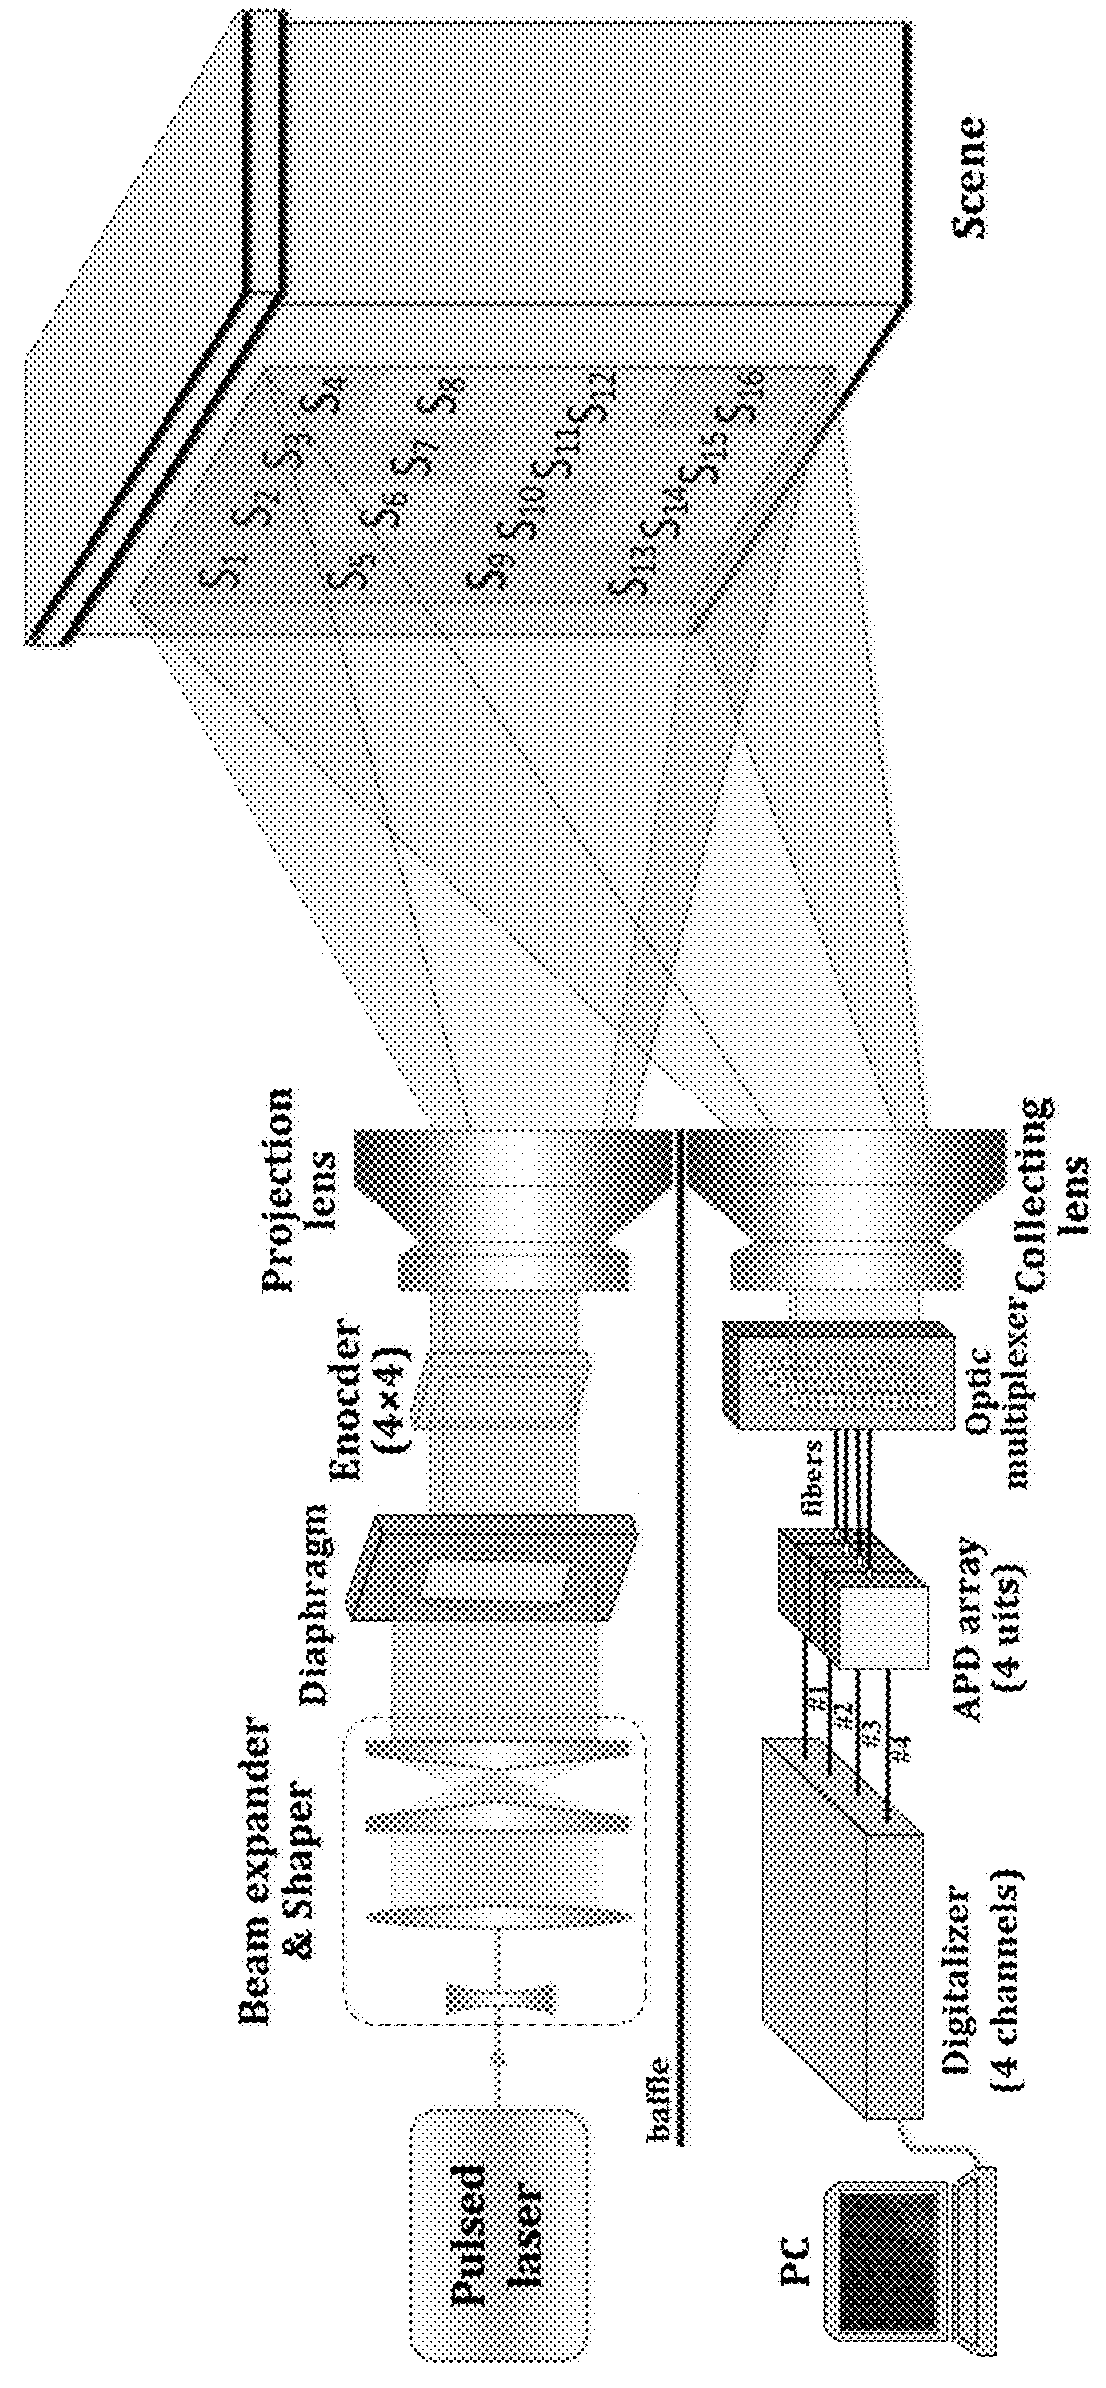 Cdma-based 3D imaging method for focal plane array lidar